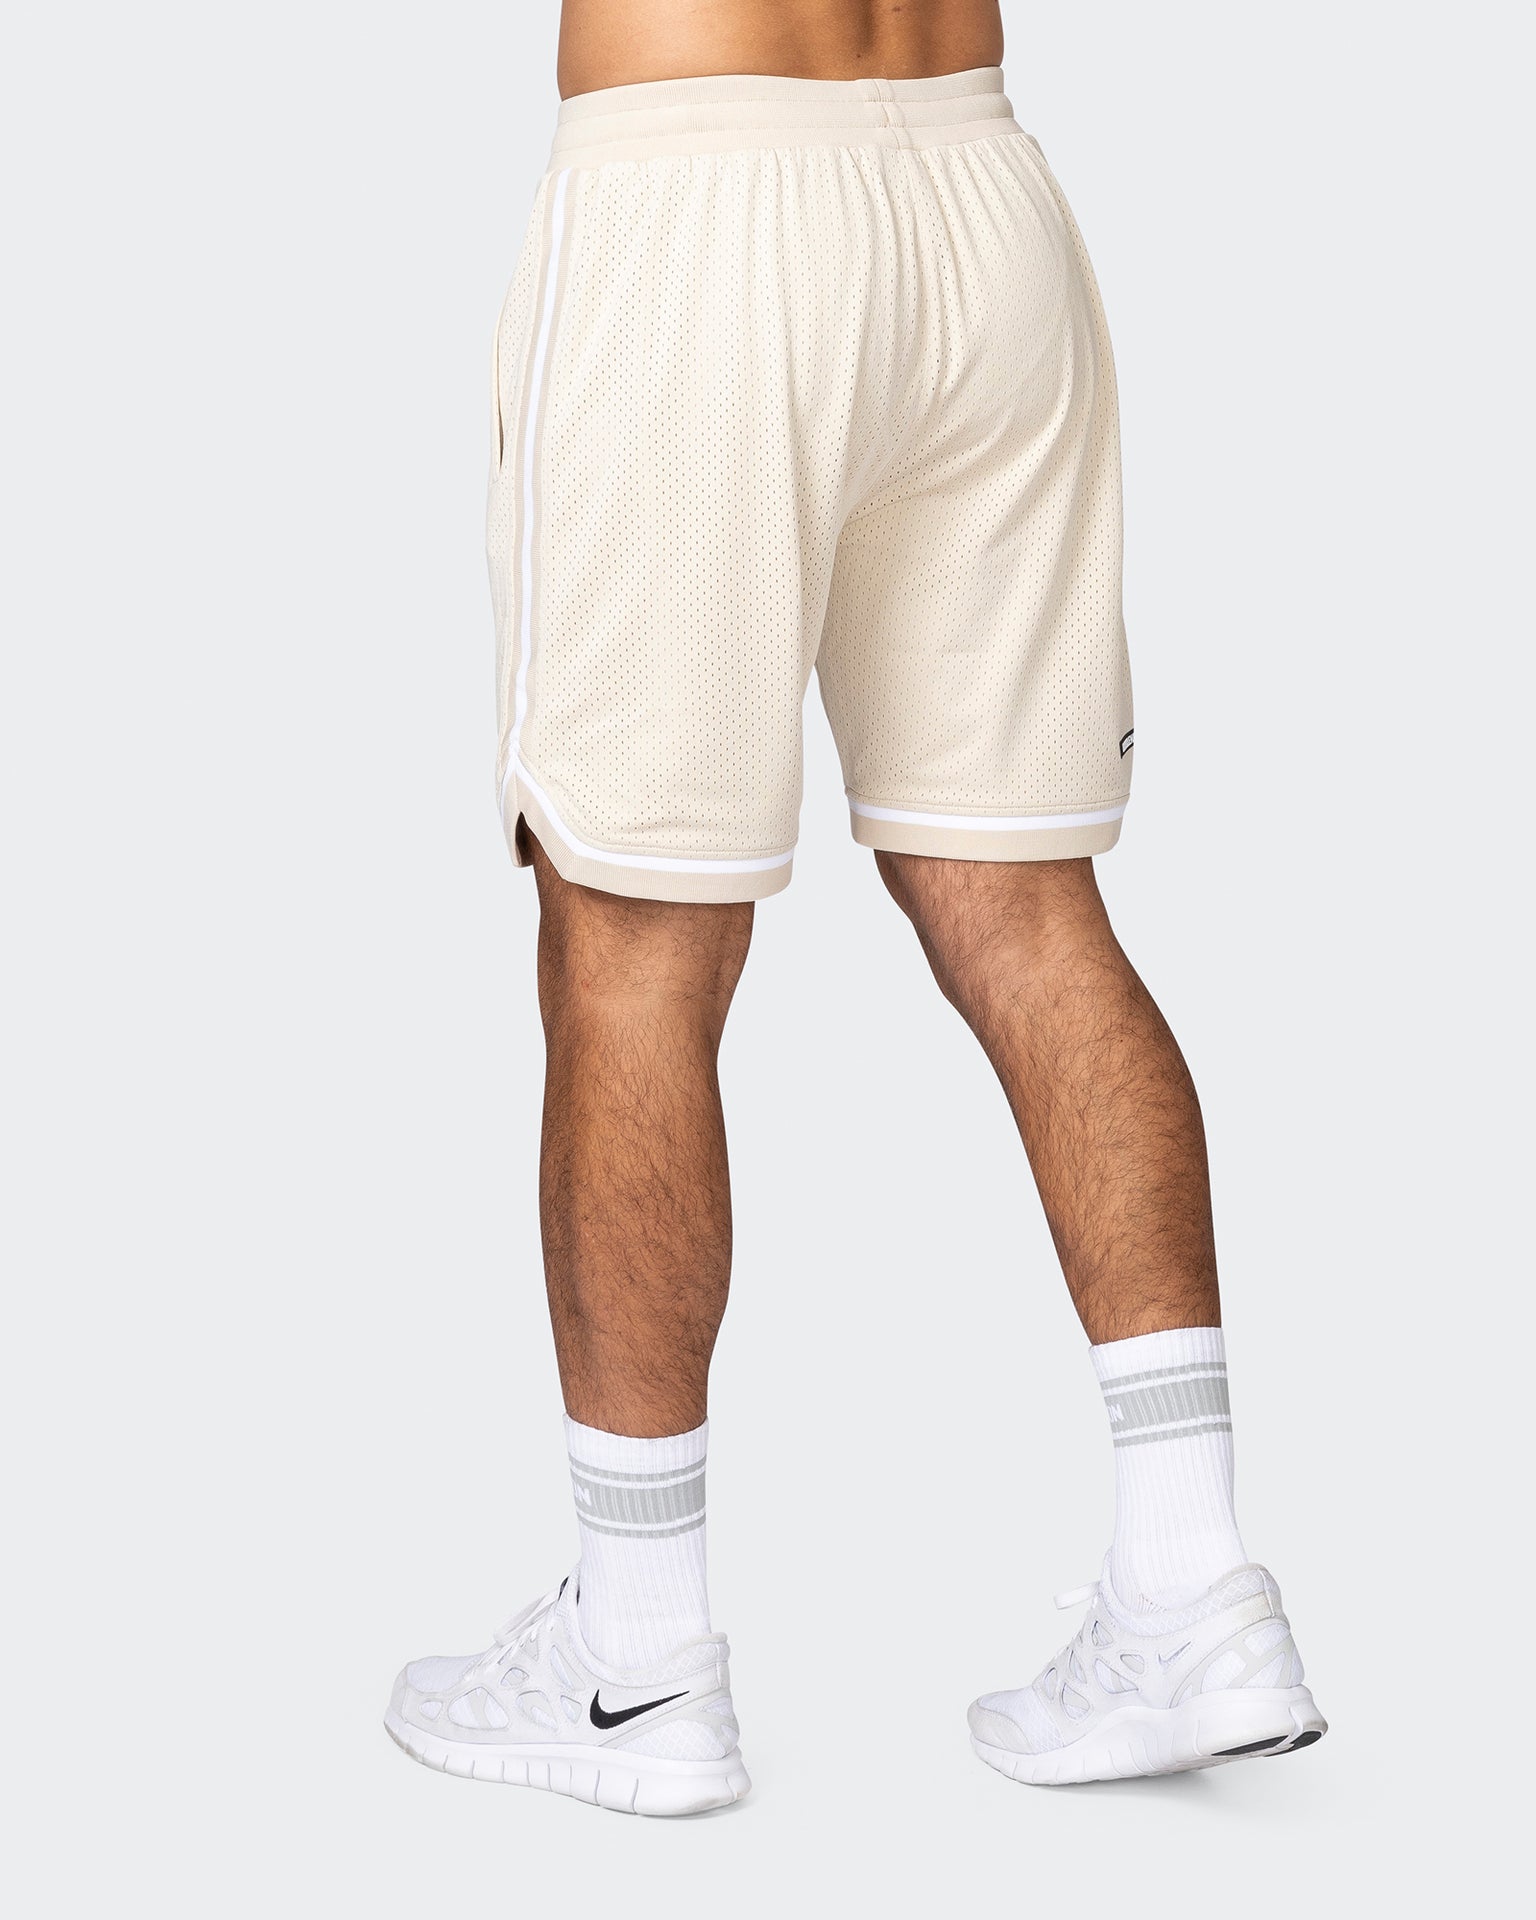 musclenation Gym Shorts Mens 8" Basketball Shorts - Cream